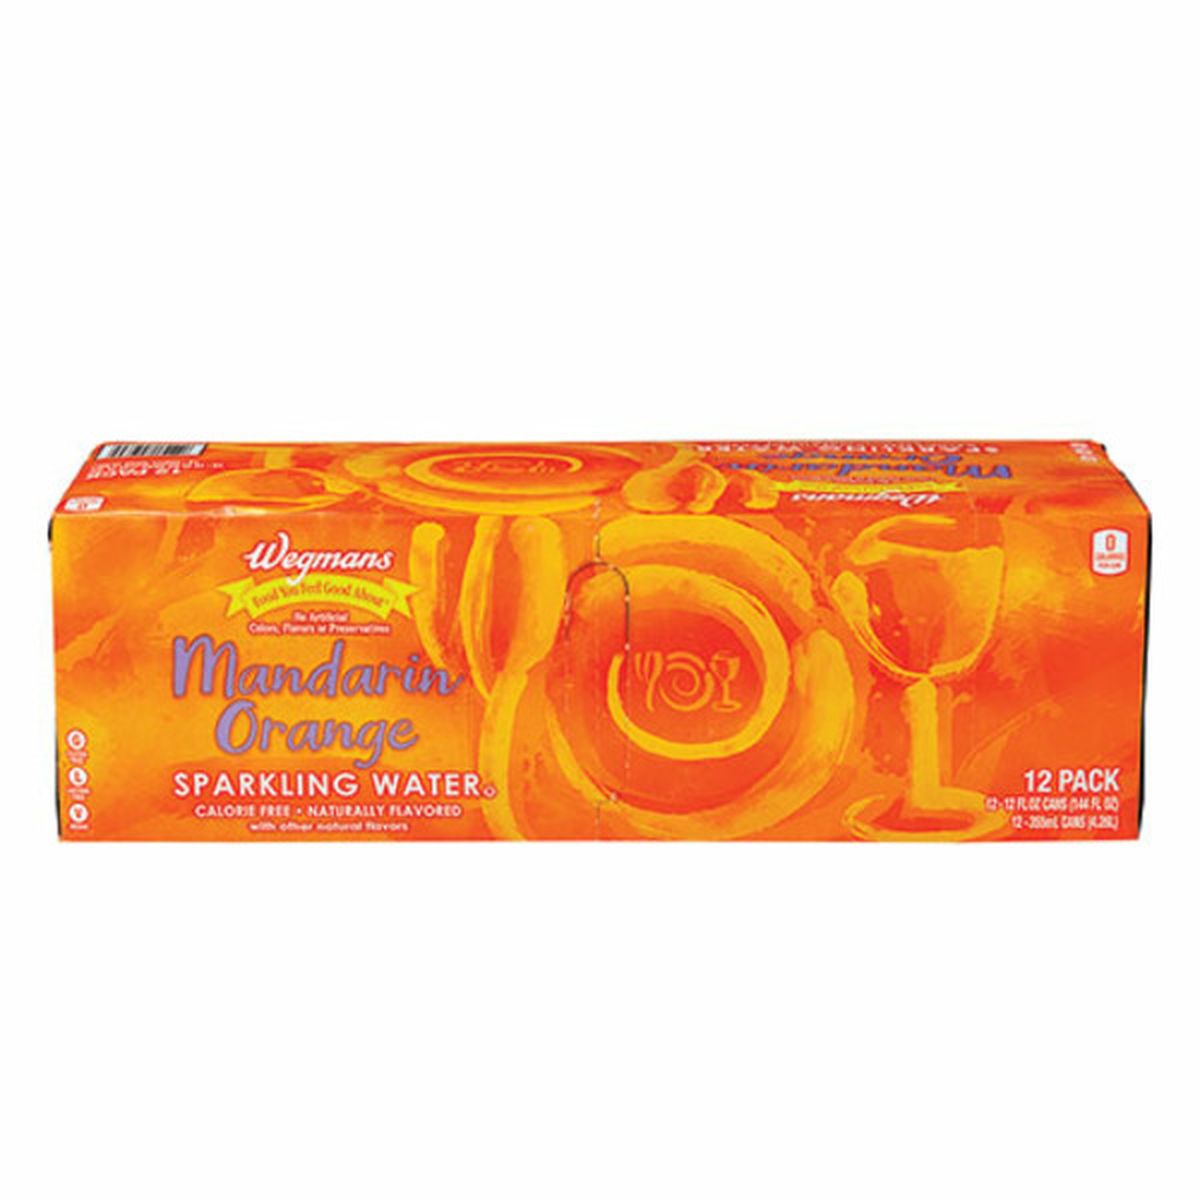 Calories in Wegmans Sparkling Water Mandarin Orange, 12 Pack